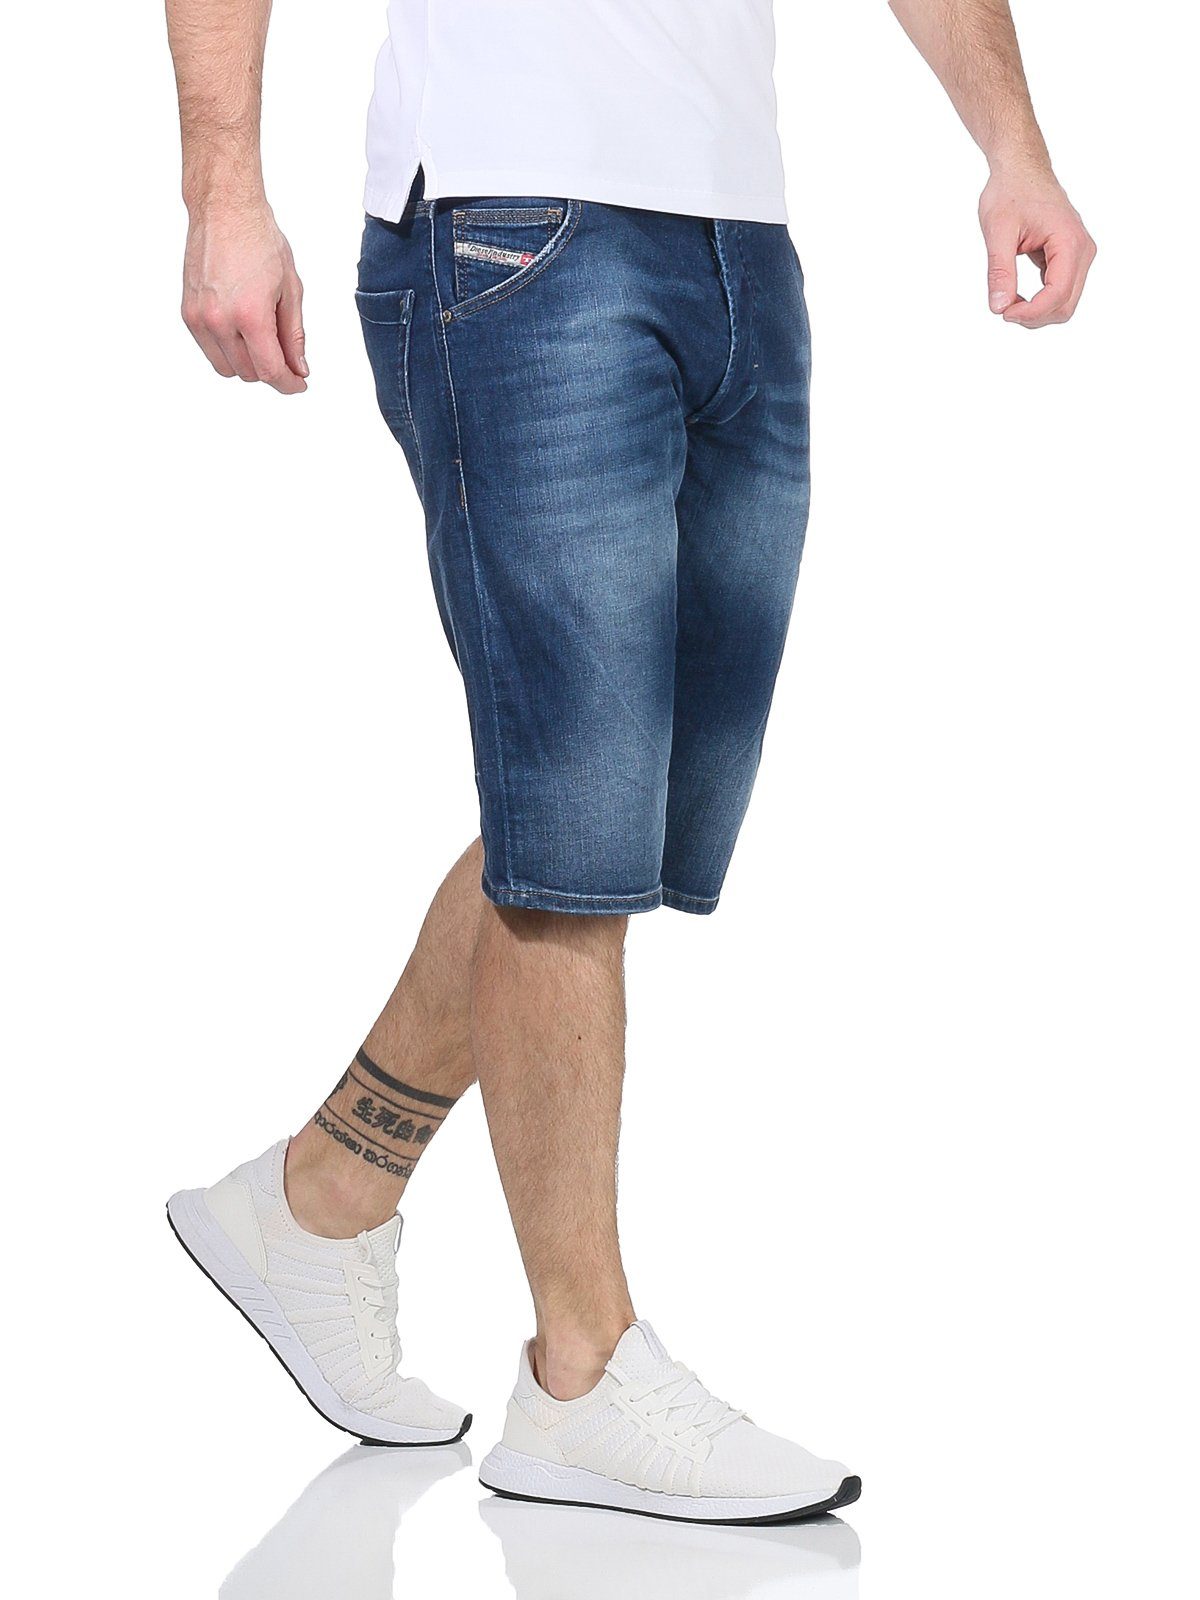 Used-Look Kroshort RG48R RG48R Shorts Diesel Blau Jeans Shorts, Herren Jeansshorts kurze Hose dezenter